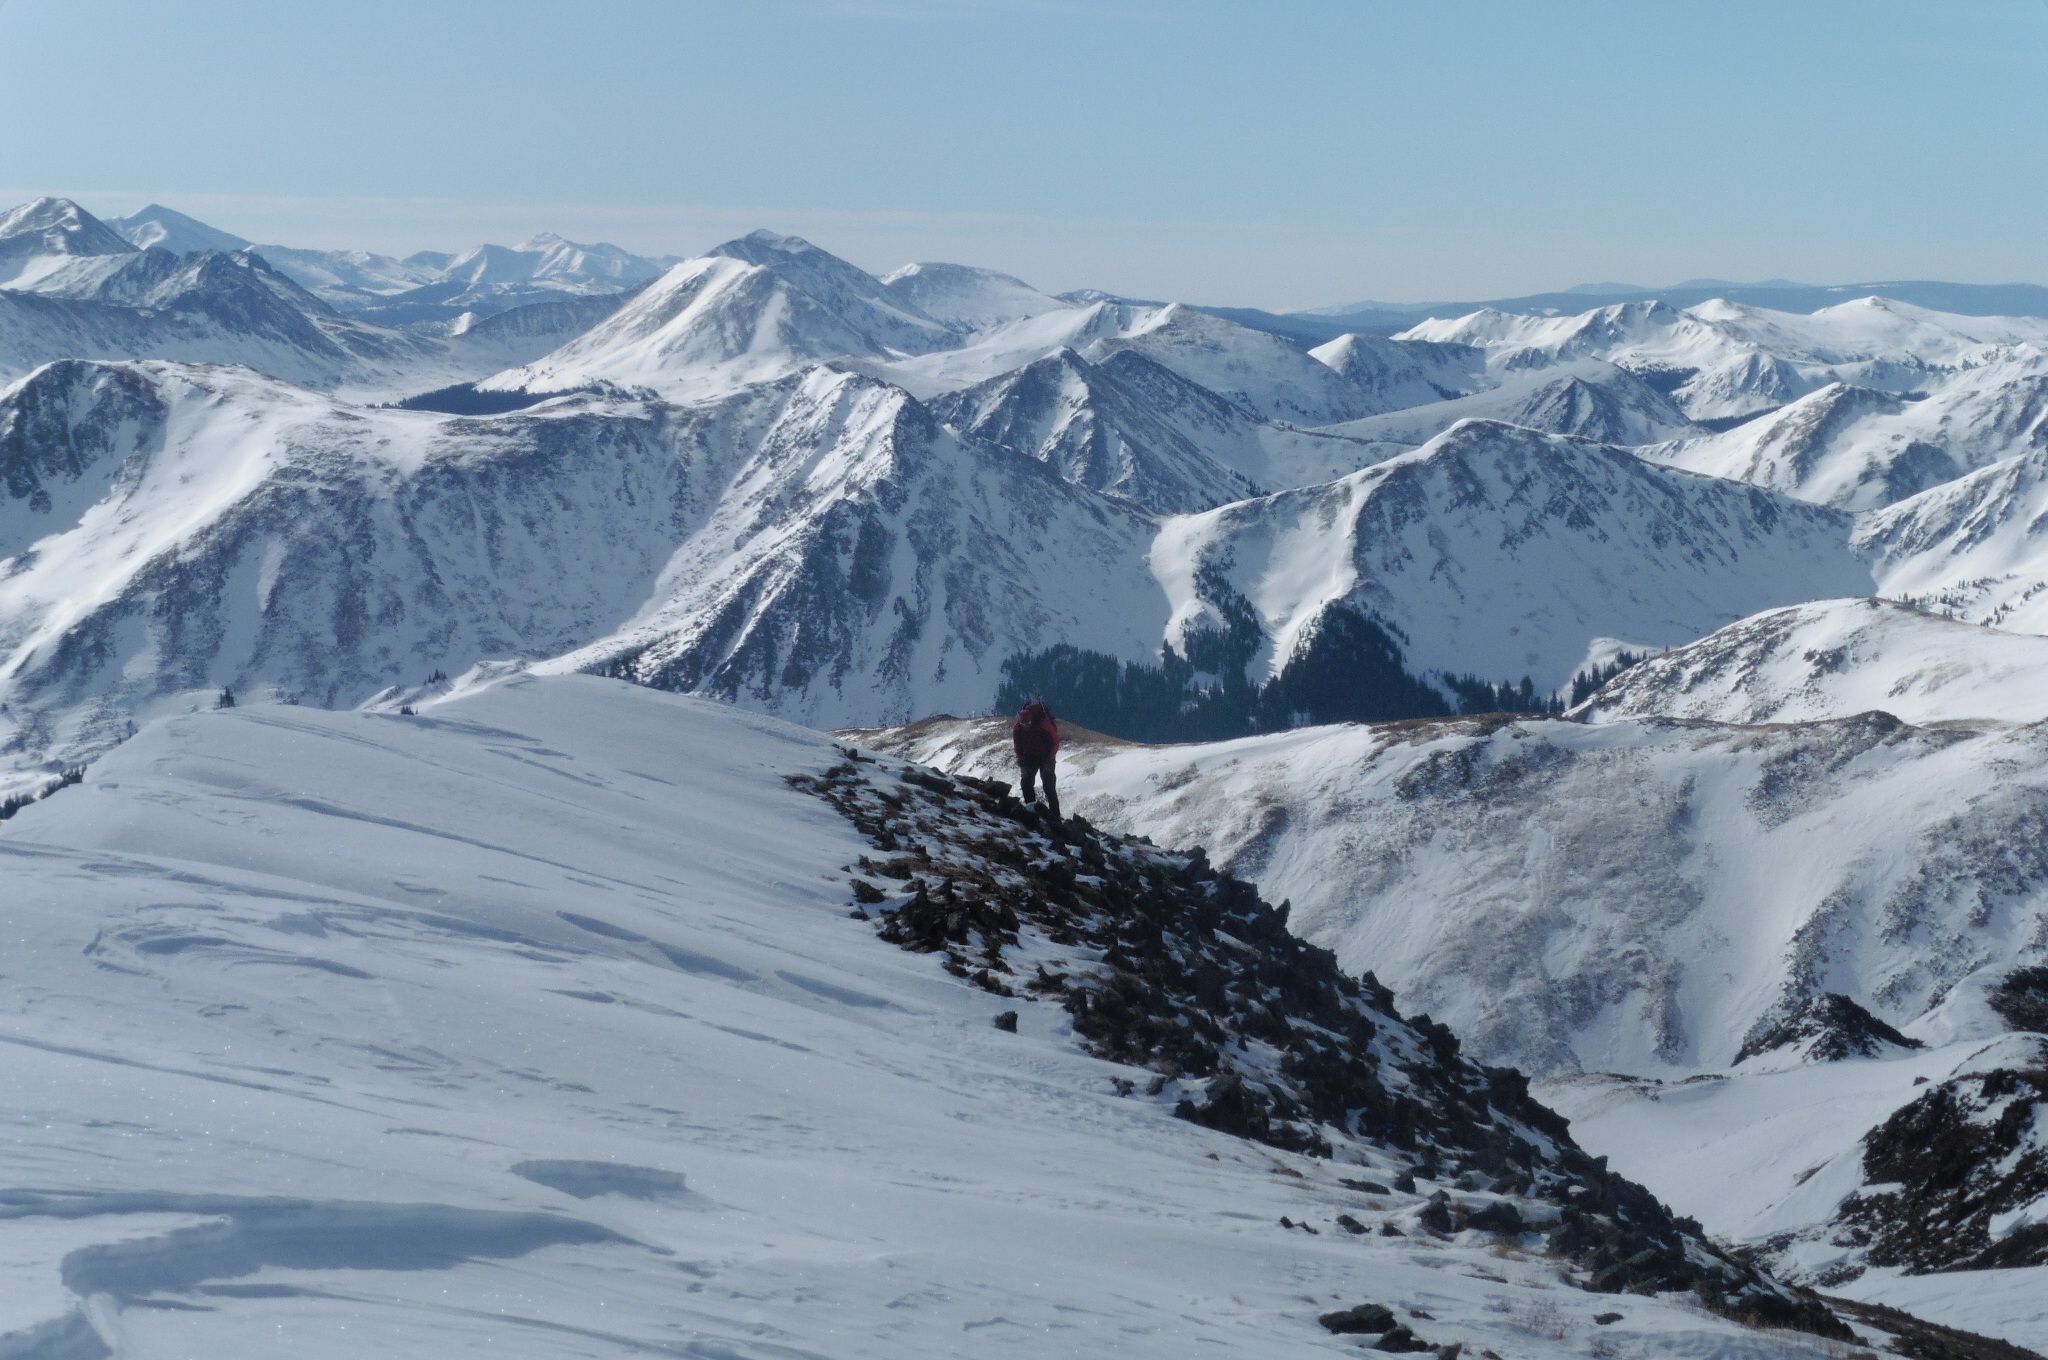 Colin atop summit ridge